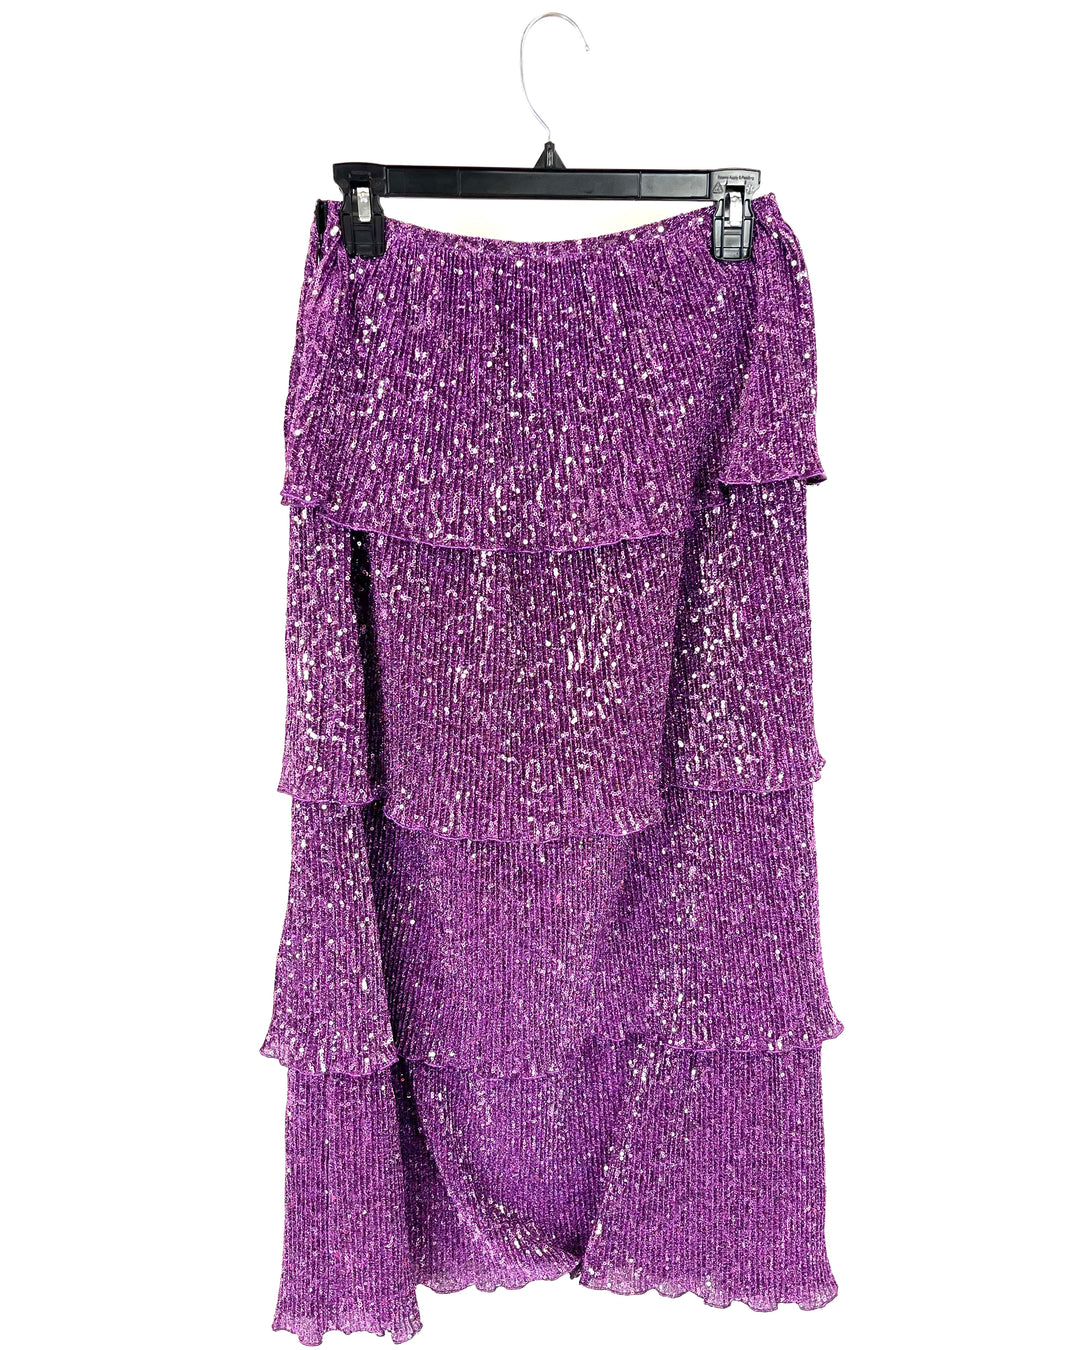 Purple Sequin Skirt - Small